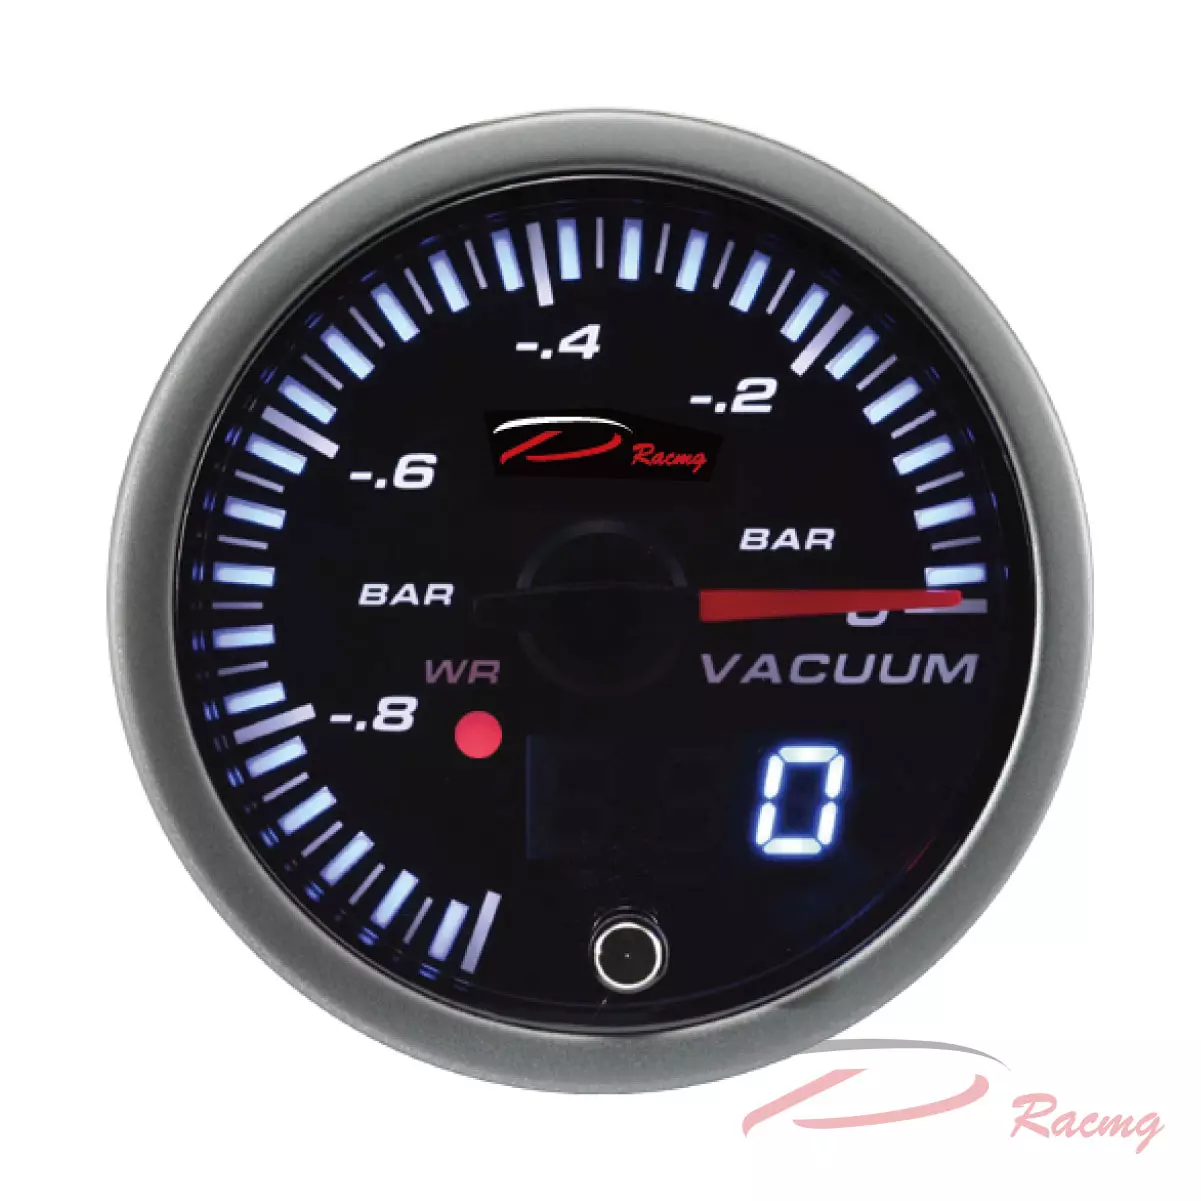 Dracing, Depo racing, 30 hg, diesel, 52mm, digital, in-hg, vacuum pressure gauge, meter, sensor, mechanical, electric